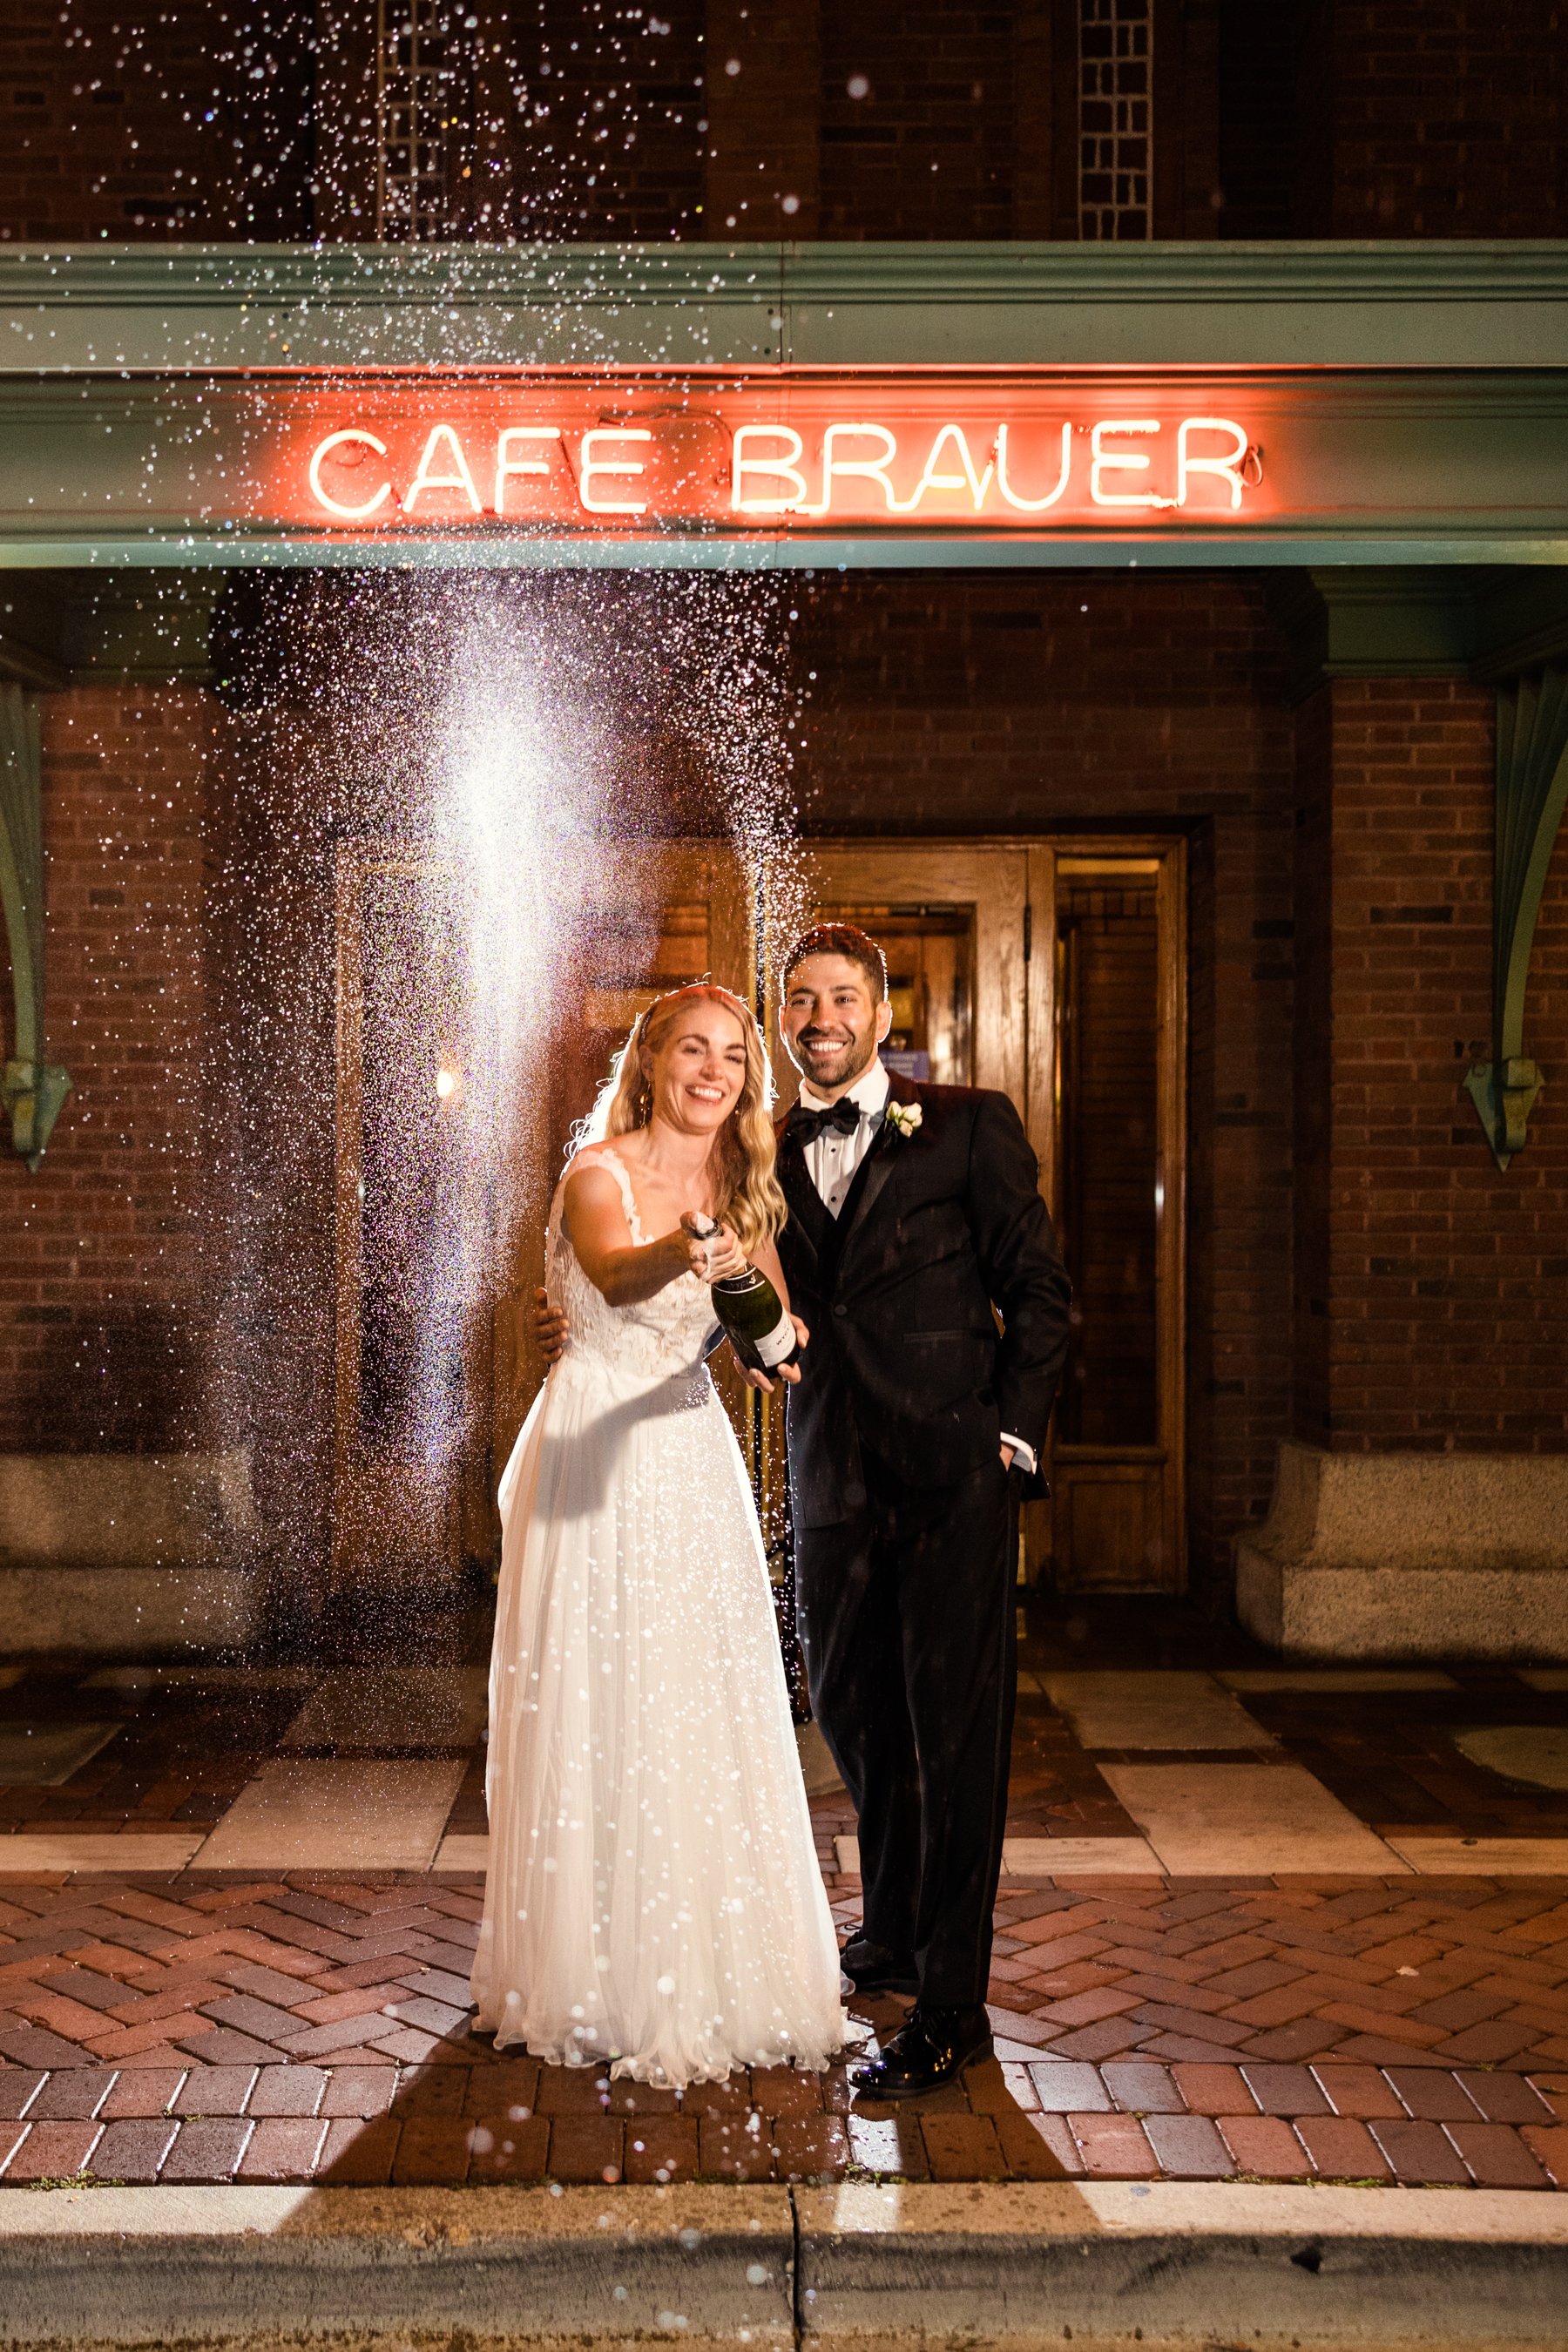 Cafe-Brauer-wedding-by-Emma-Mullins-Photography-133.jpg